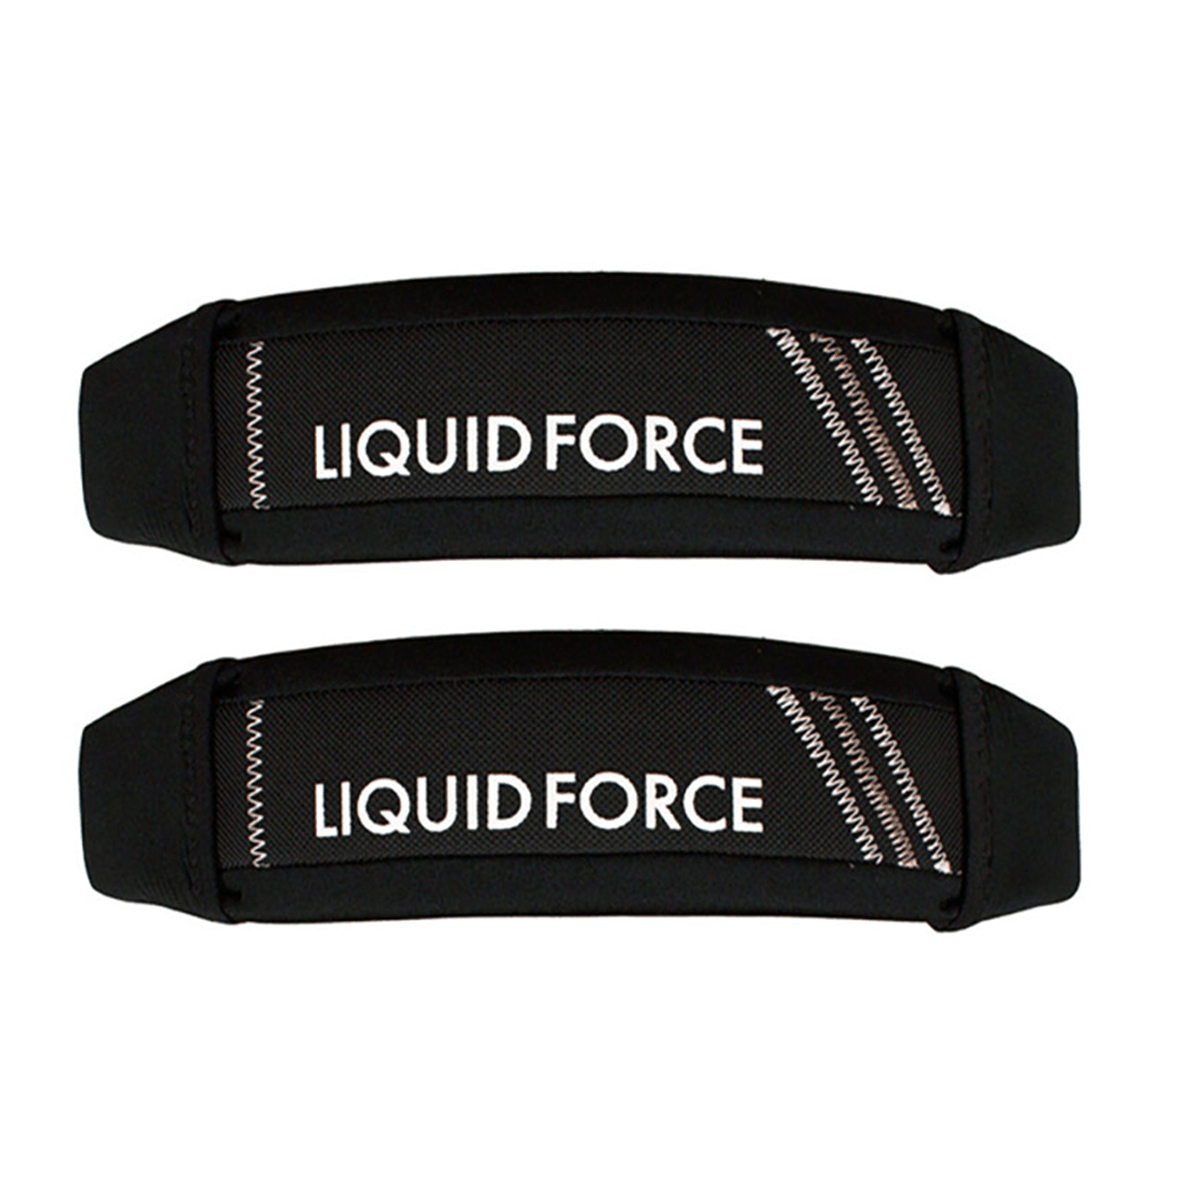 Liquid Force Wake Foil Strap Kit (Pair) - BoardCo